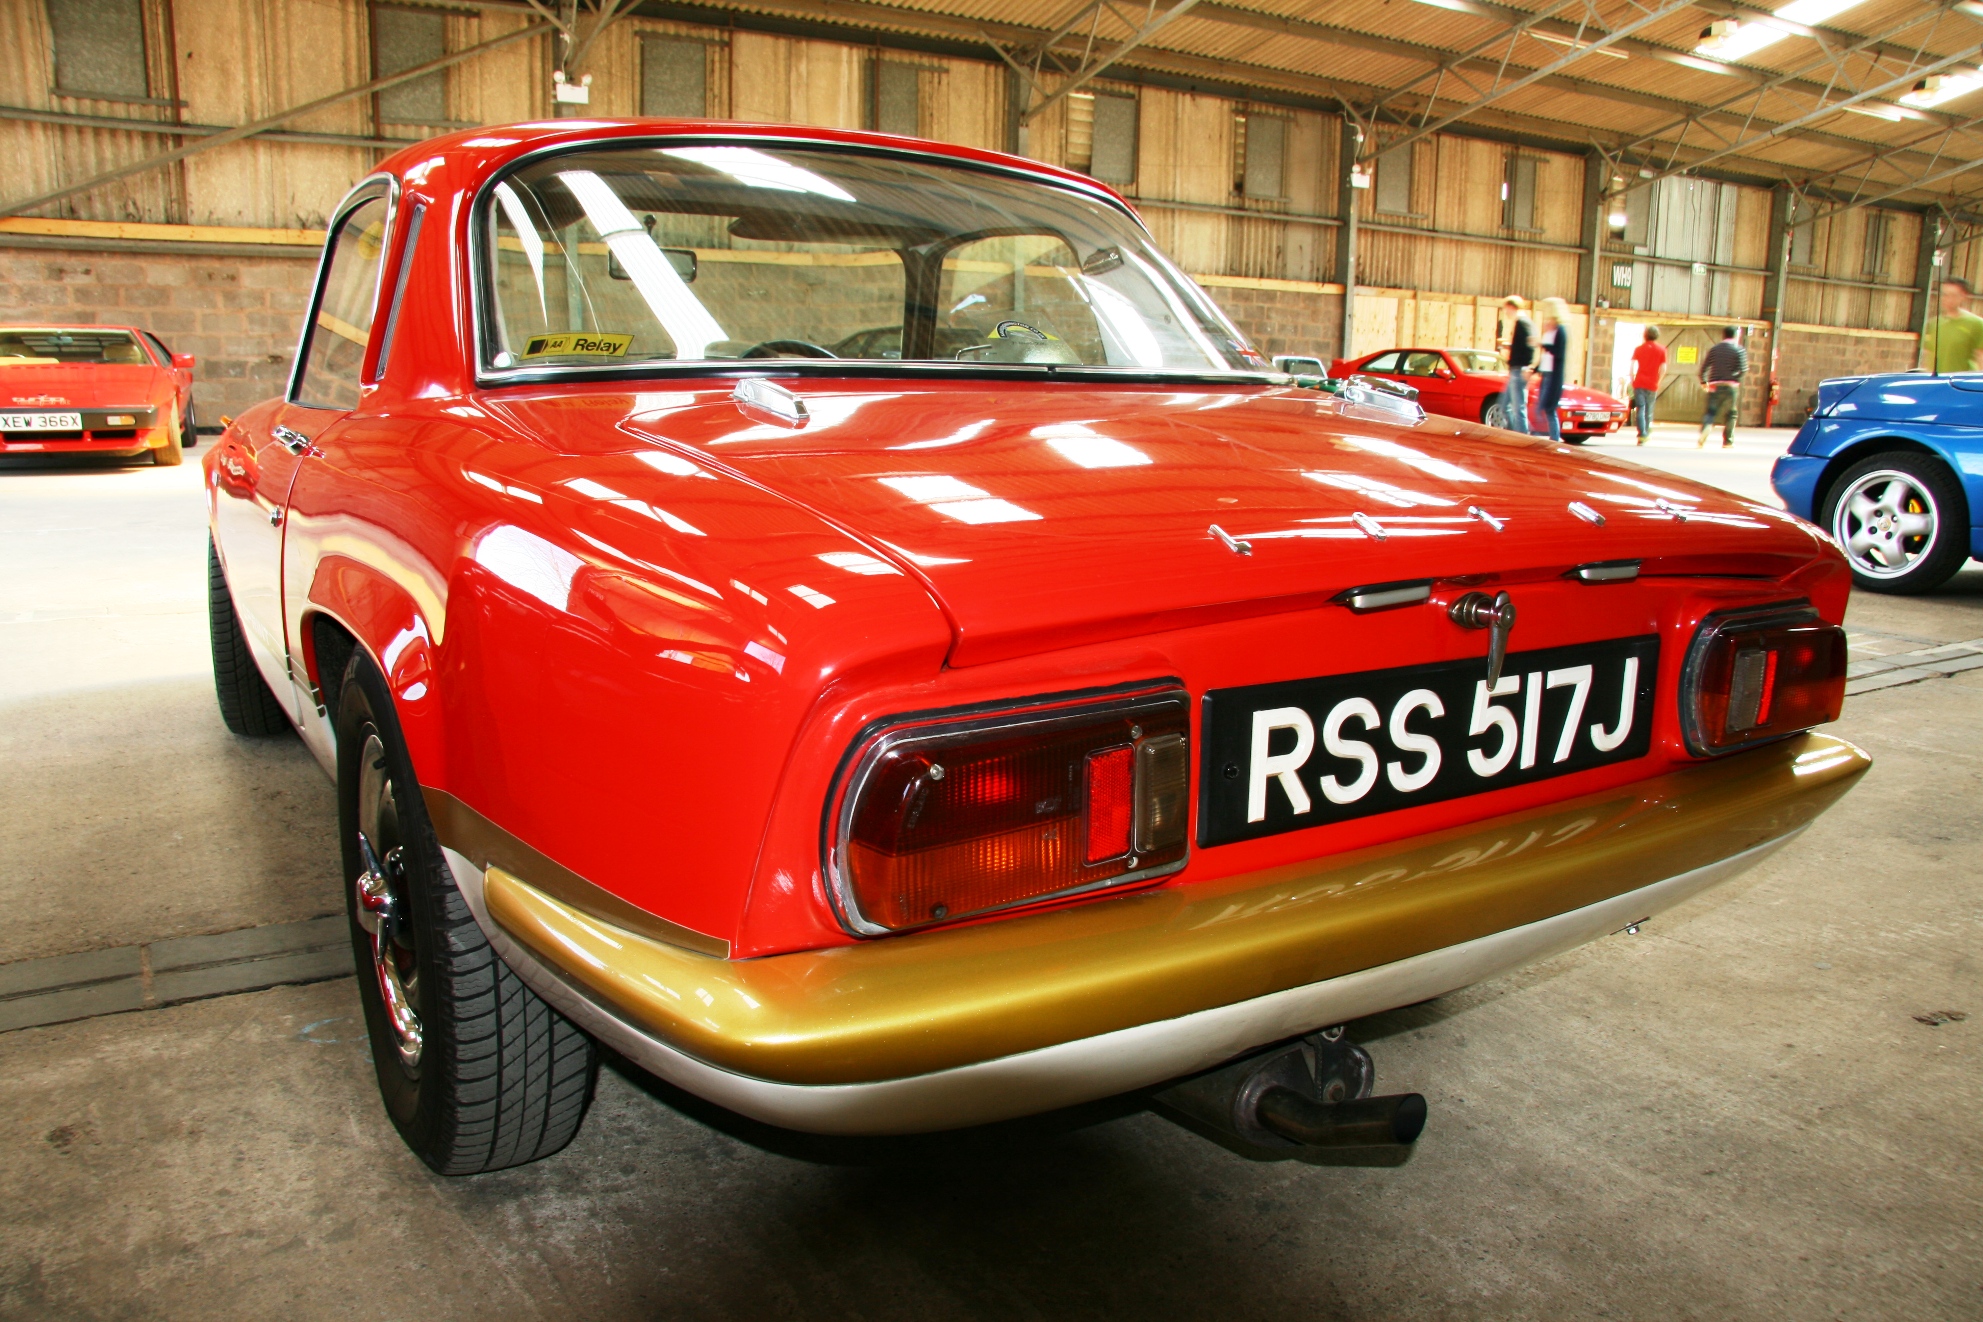 1971 RSS 517J Lotus Elan Sprint FHC / Flickr - Partage de photos!